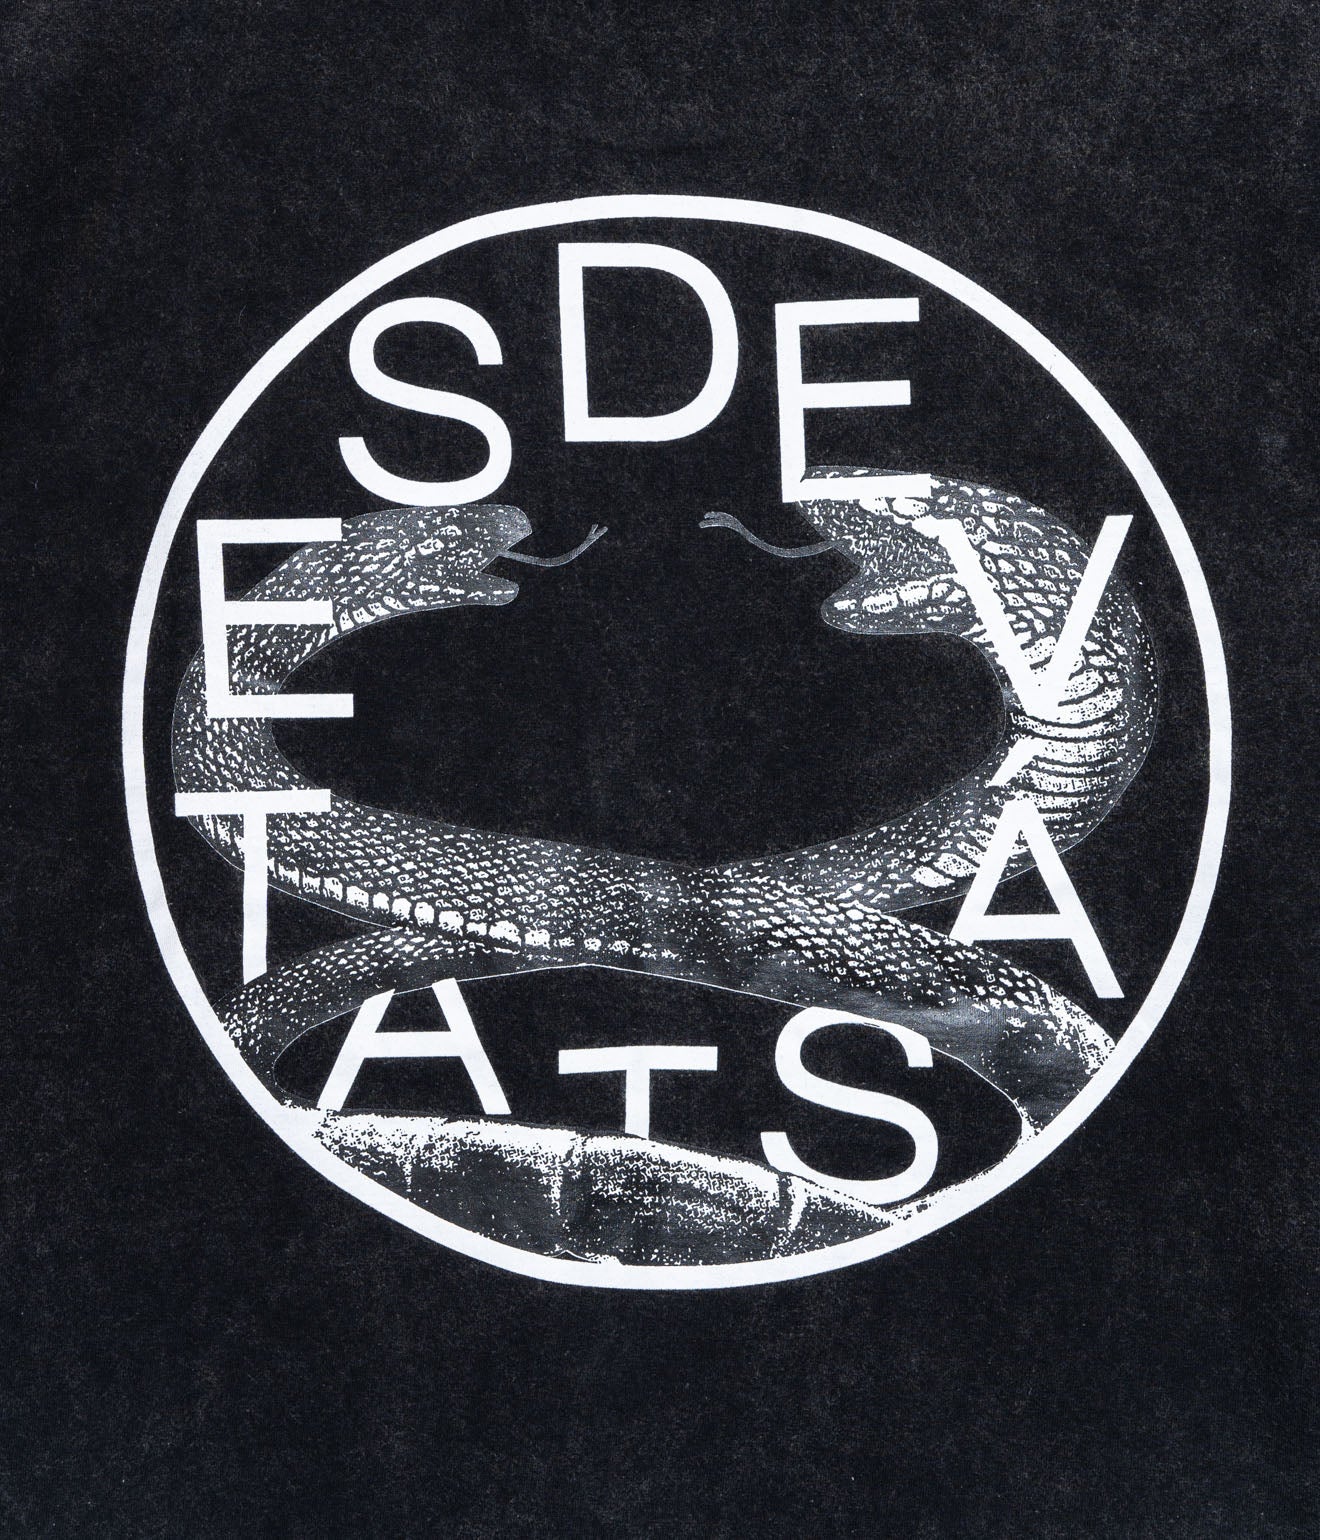 DEVÁ STATES "SERPENTS T-Shirt" Washed Black - WEAREALLANIMALS